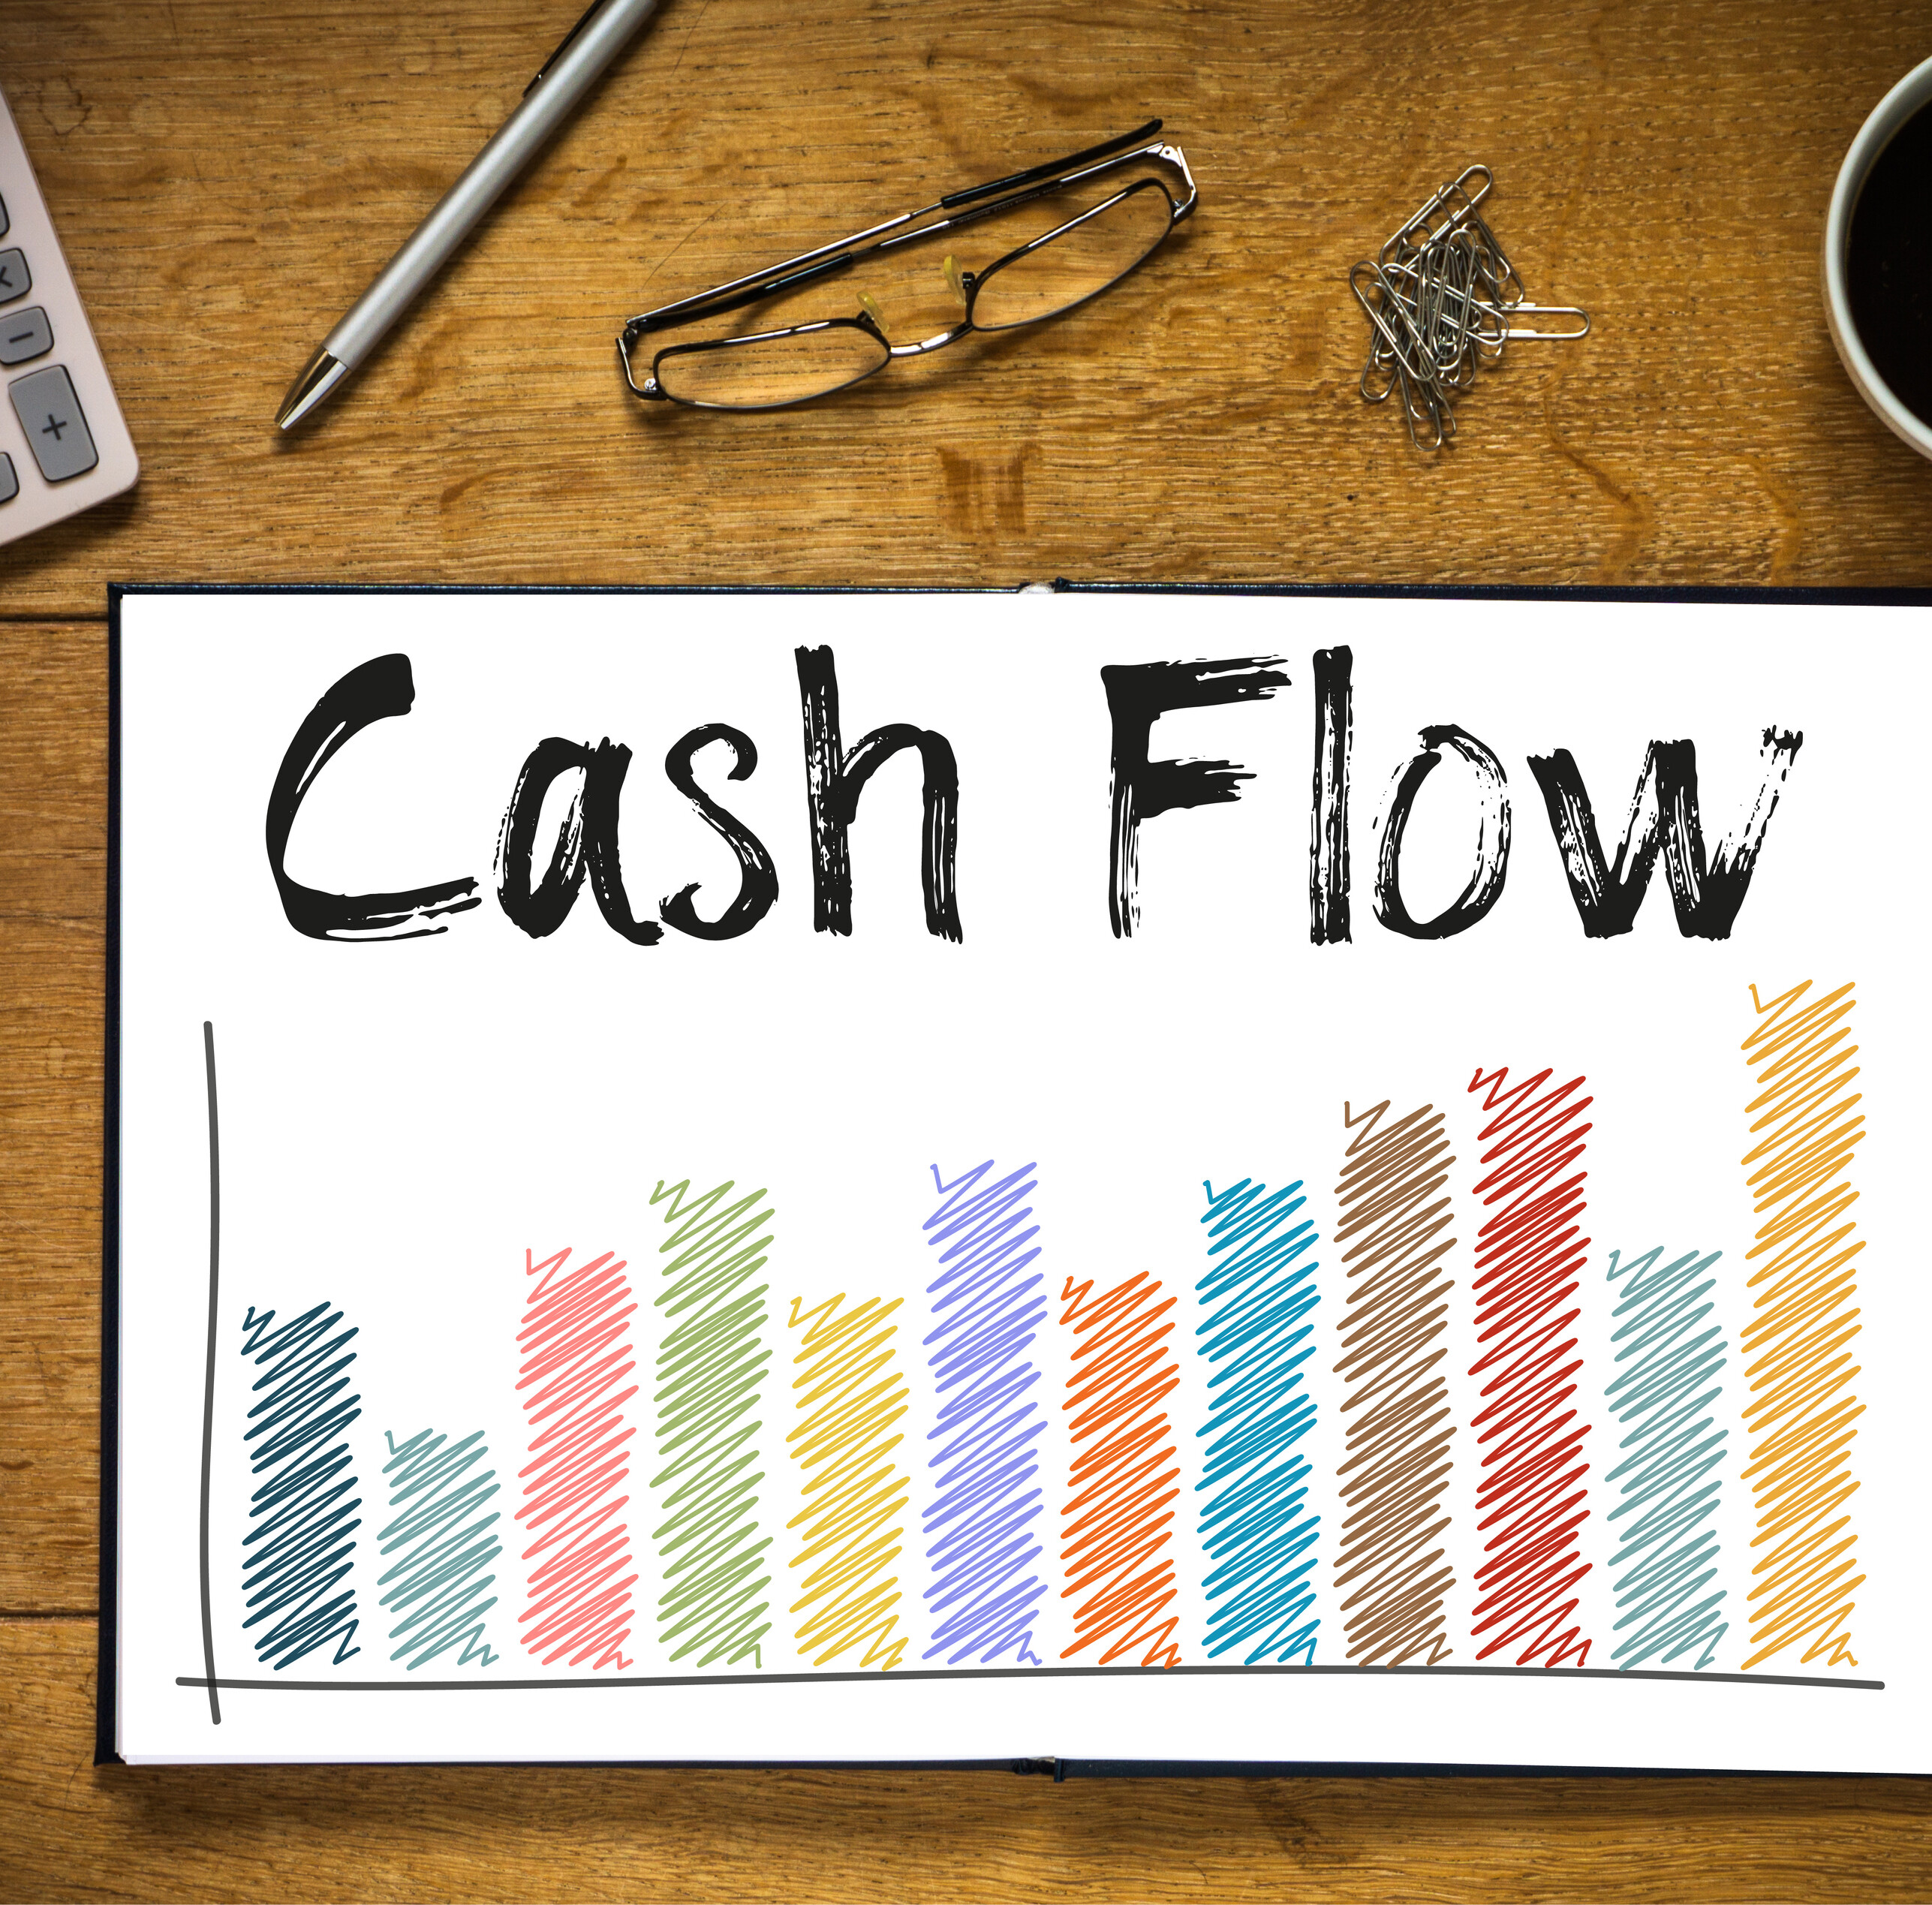 Discounted Cashflow Modell